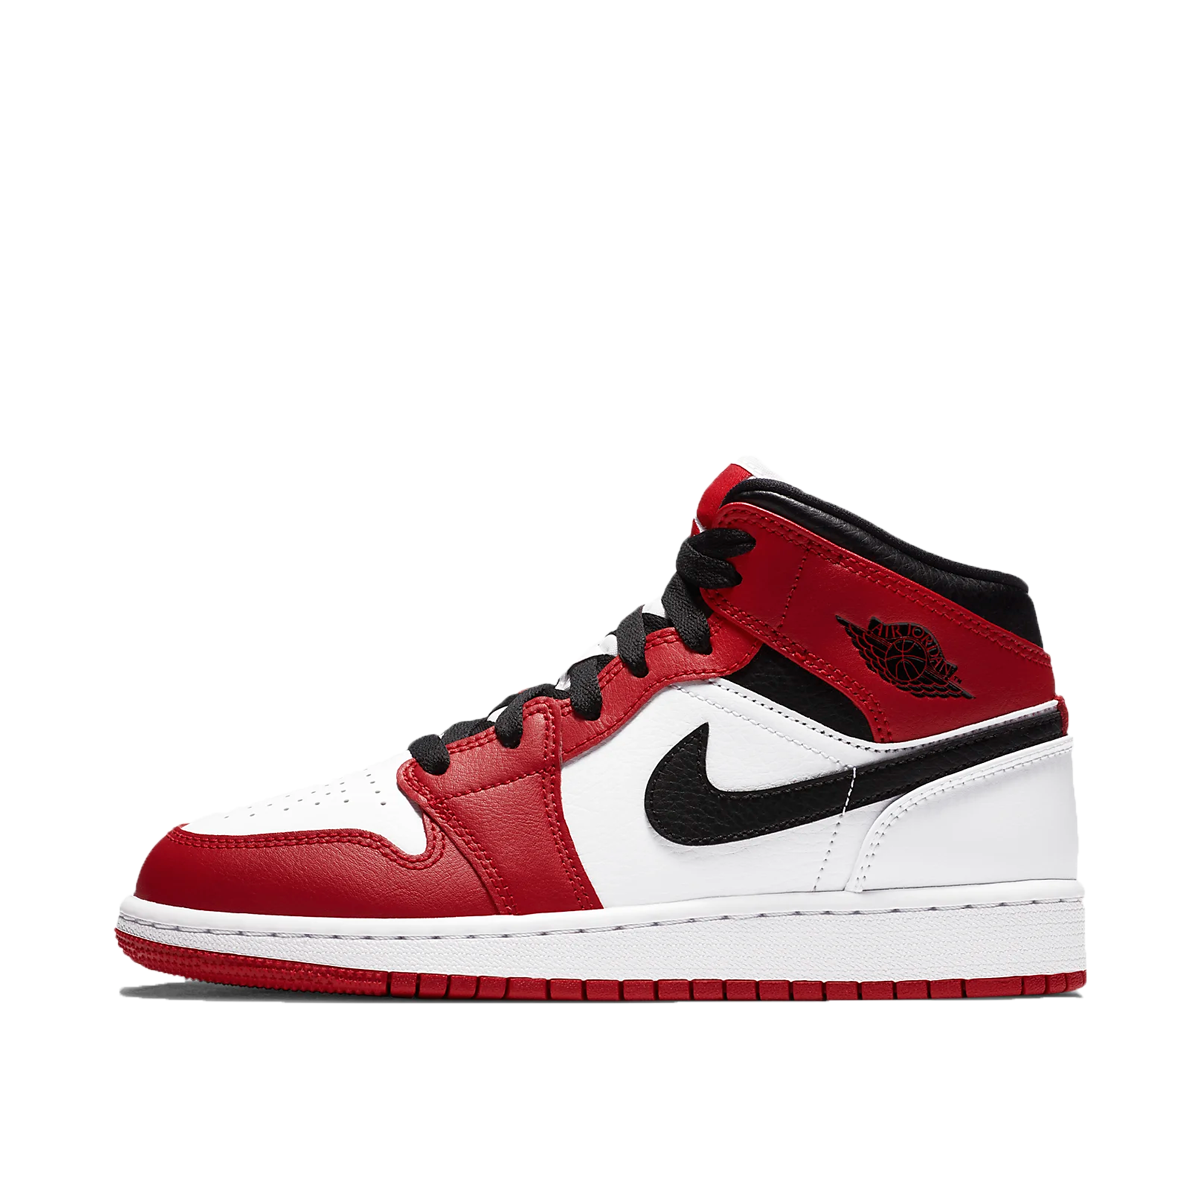 How to Style the Air Jordan 1 Chicago - KLEKT Blog